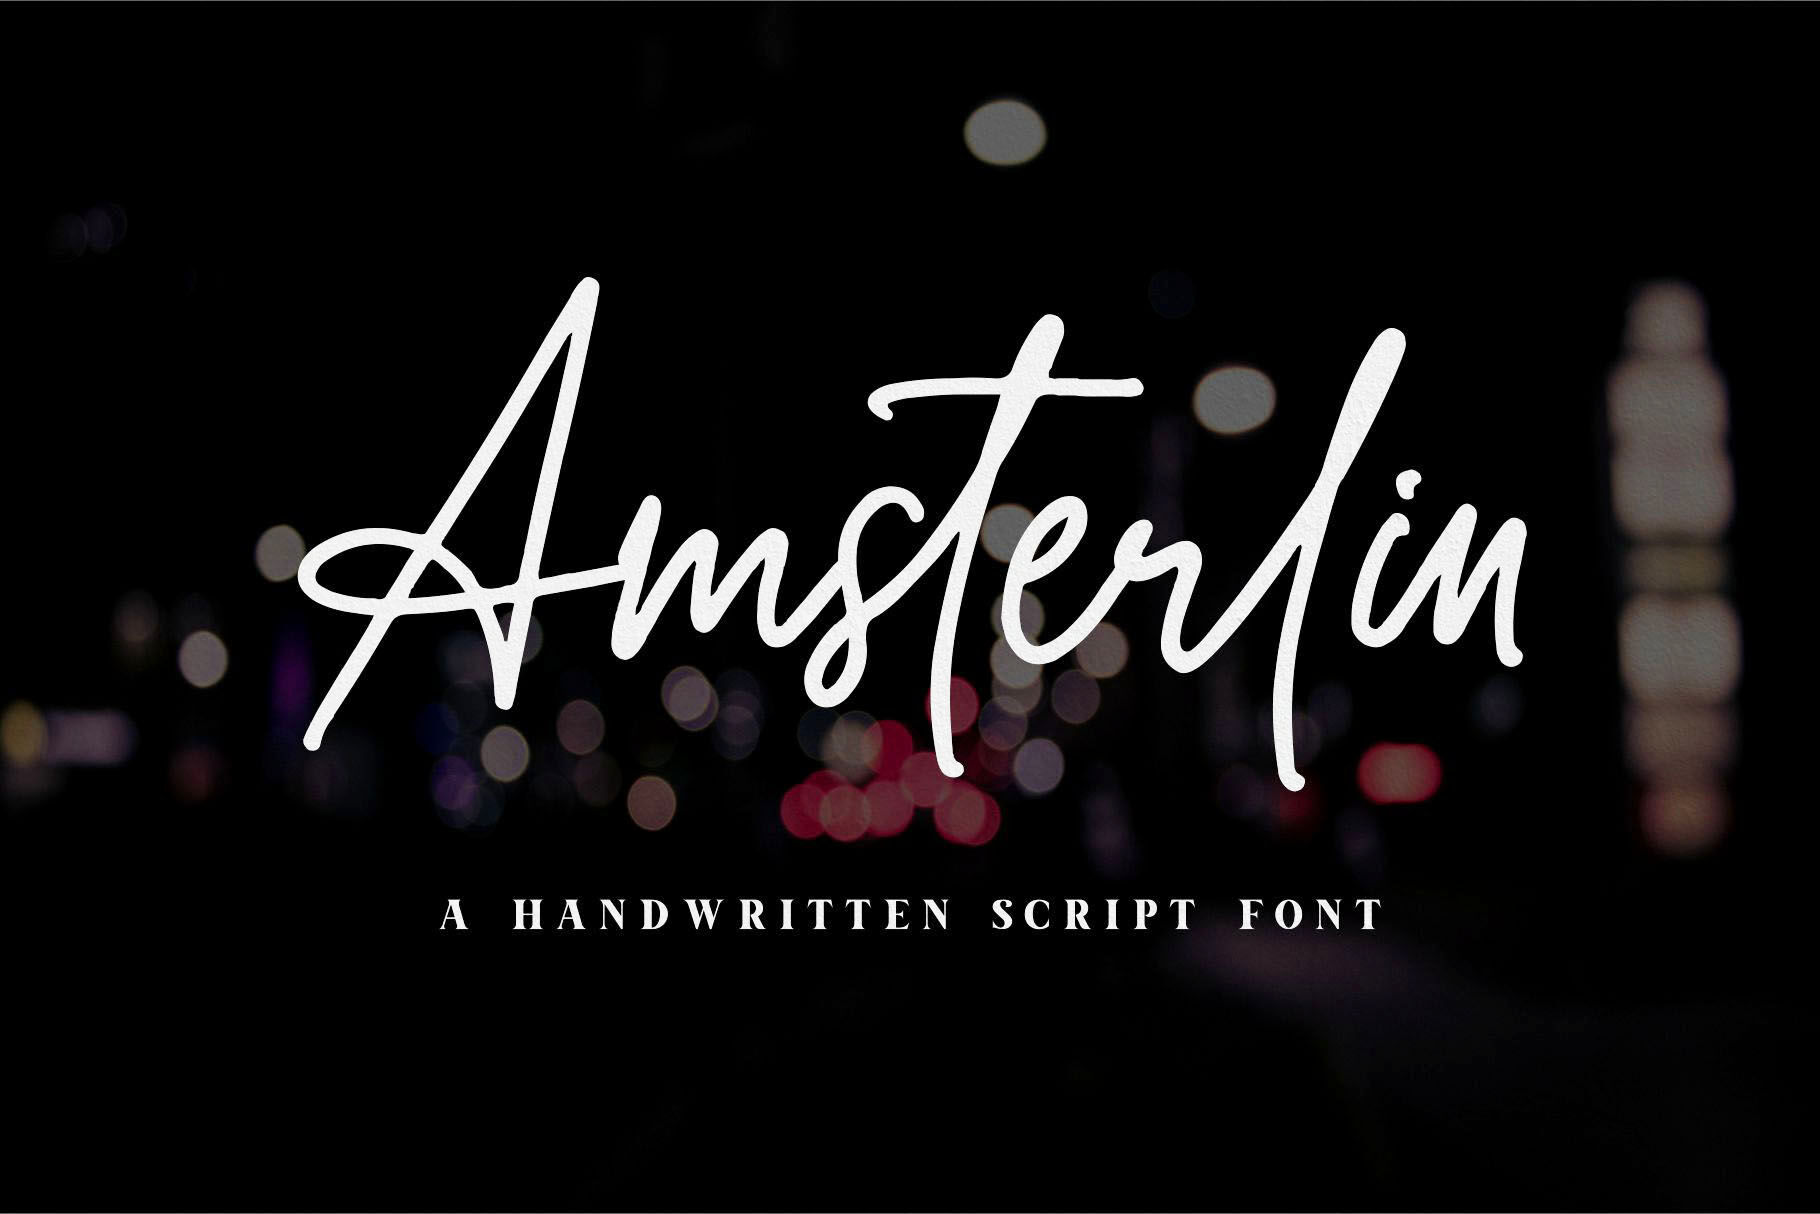 Amsterlin Handwritten Script Font Price 3 By Hanzelstudio Thehungryjpeg Com